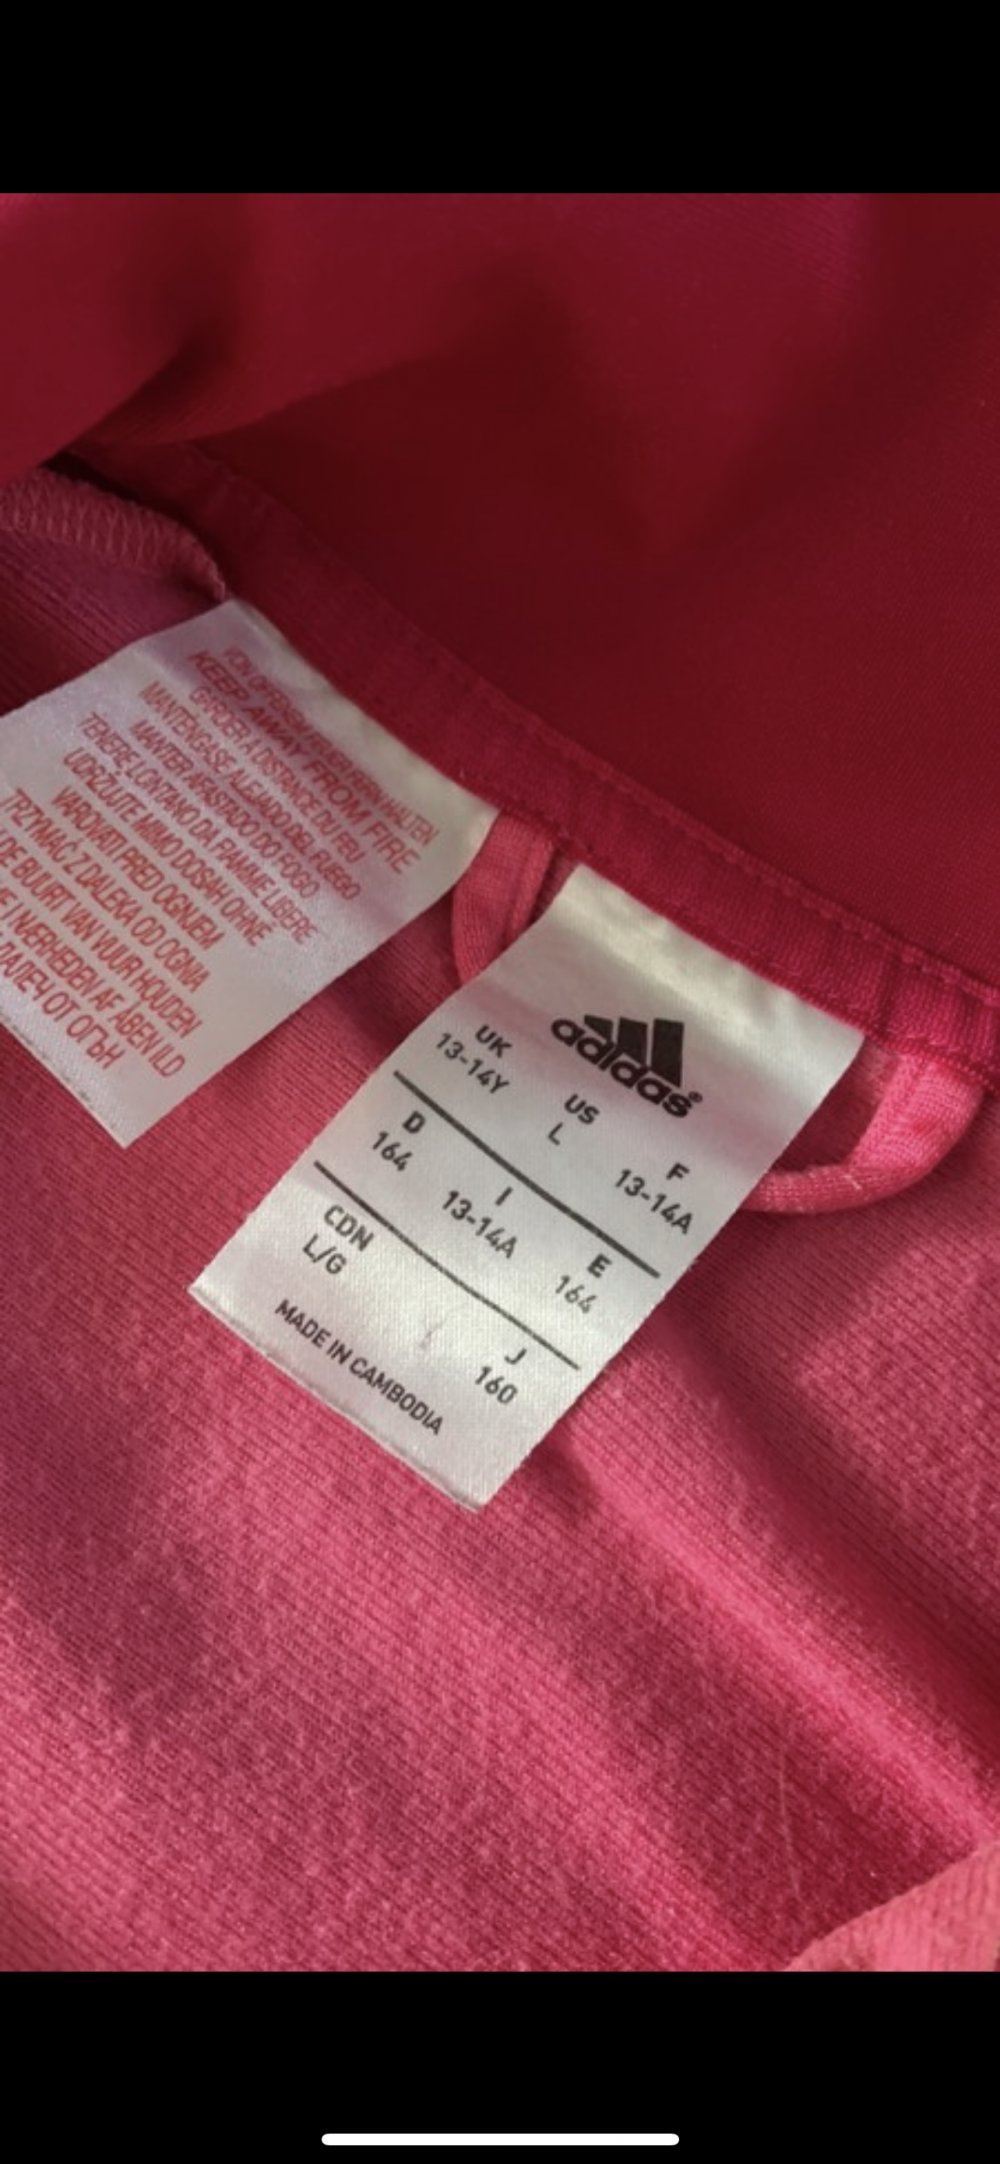 Adidas Jacke pink 